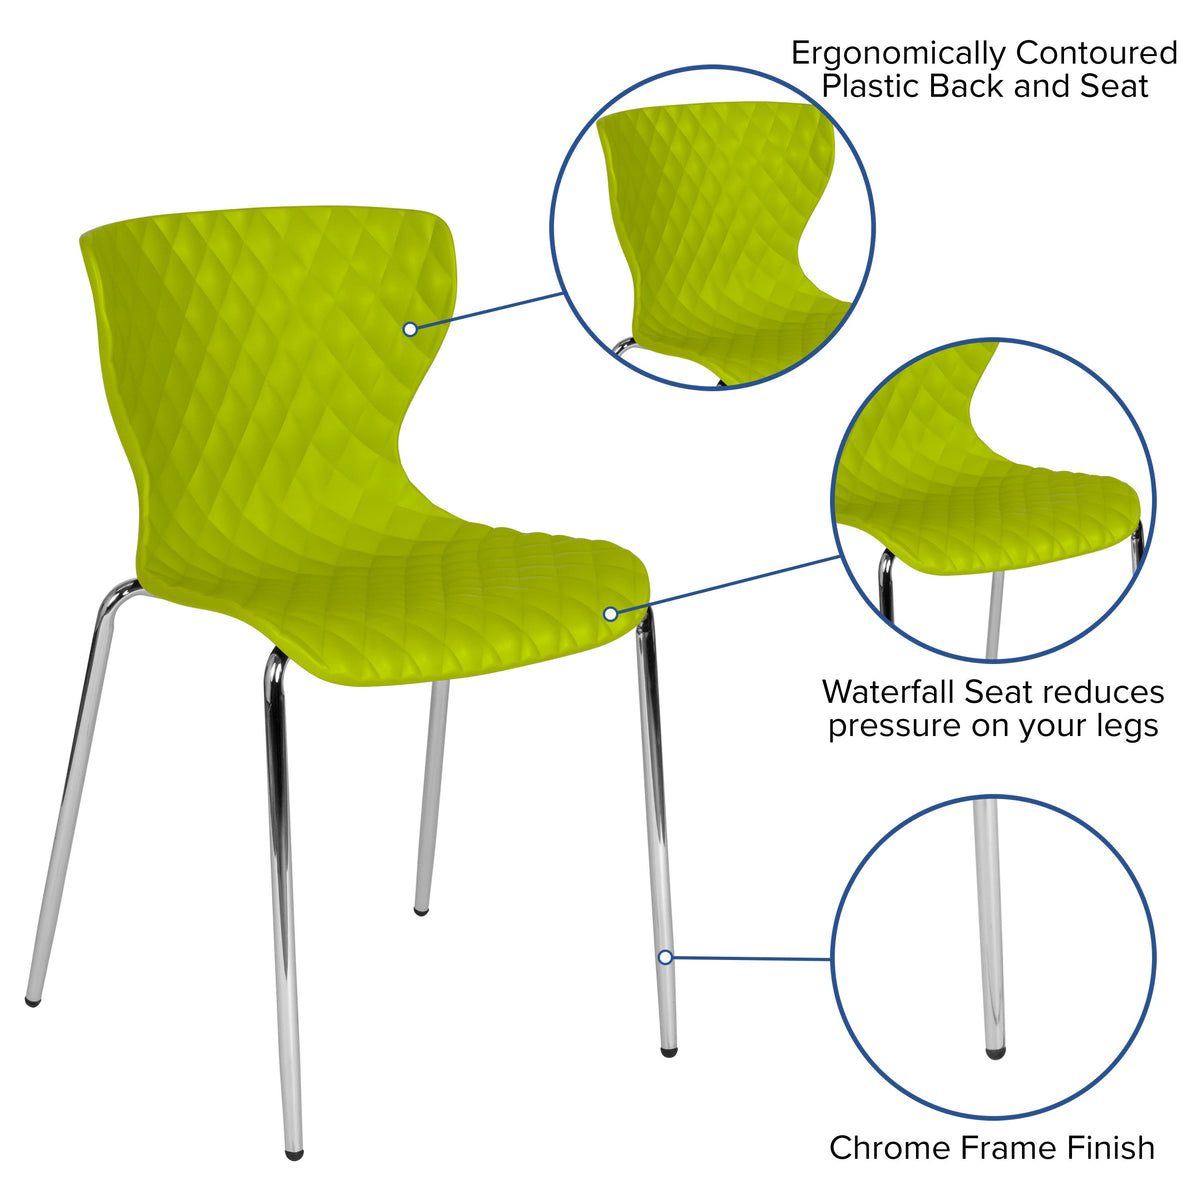 Citrus Green |#| Contemporary Design Citrus Green Plastic Stack Chair